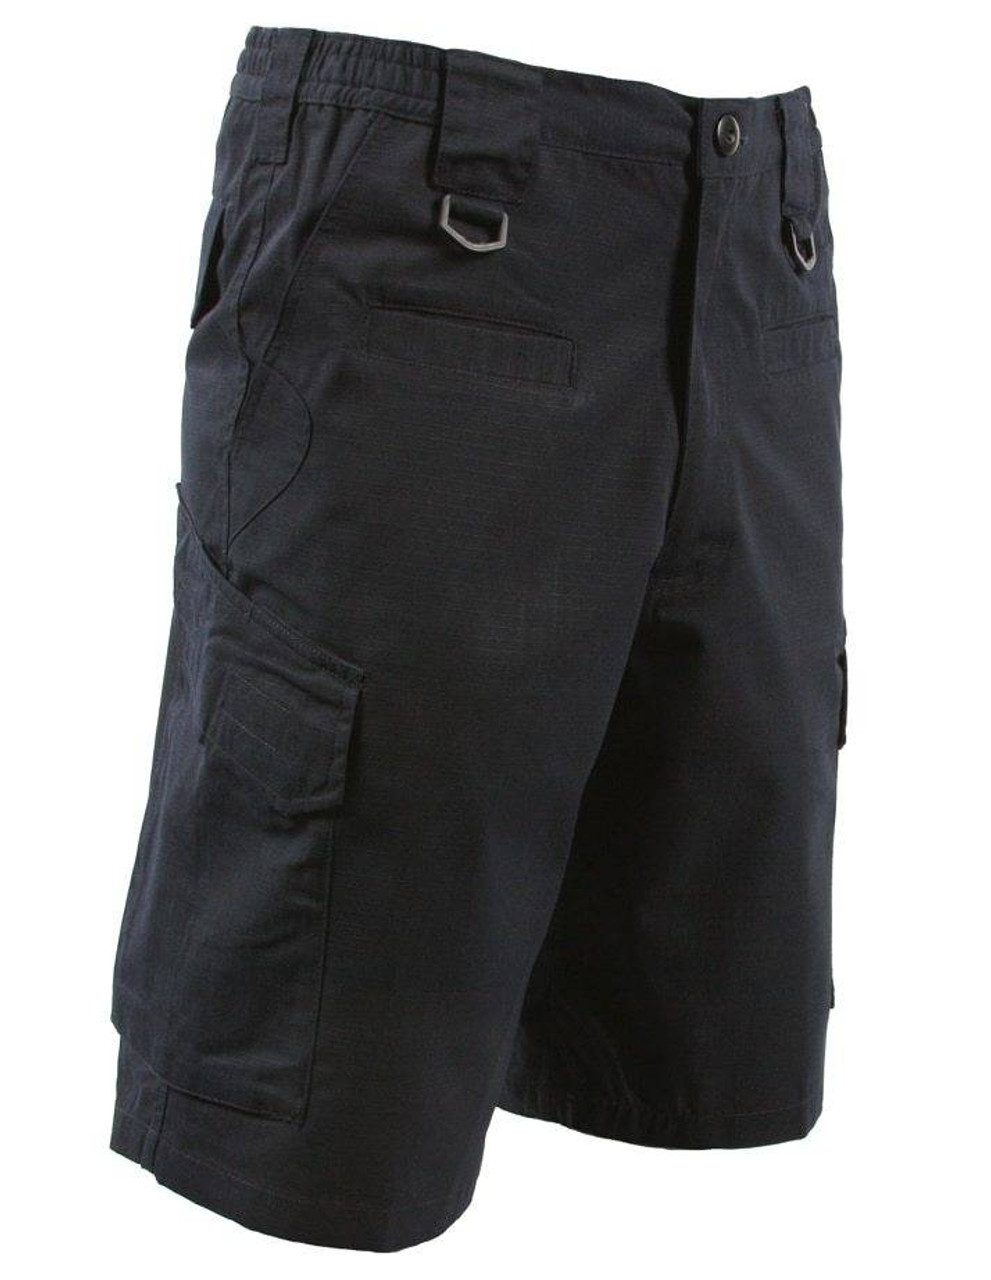 LA Police Gear Operator Tactical Shorts